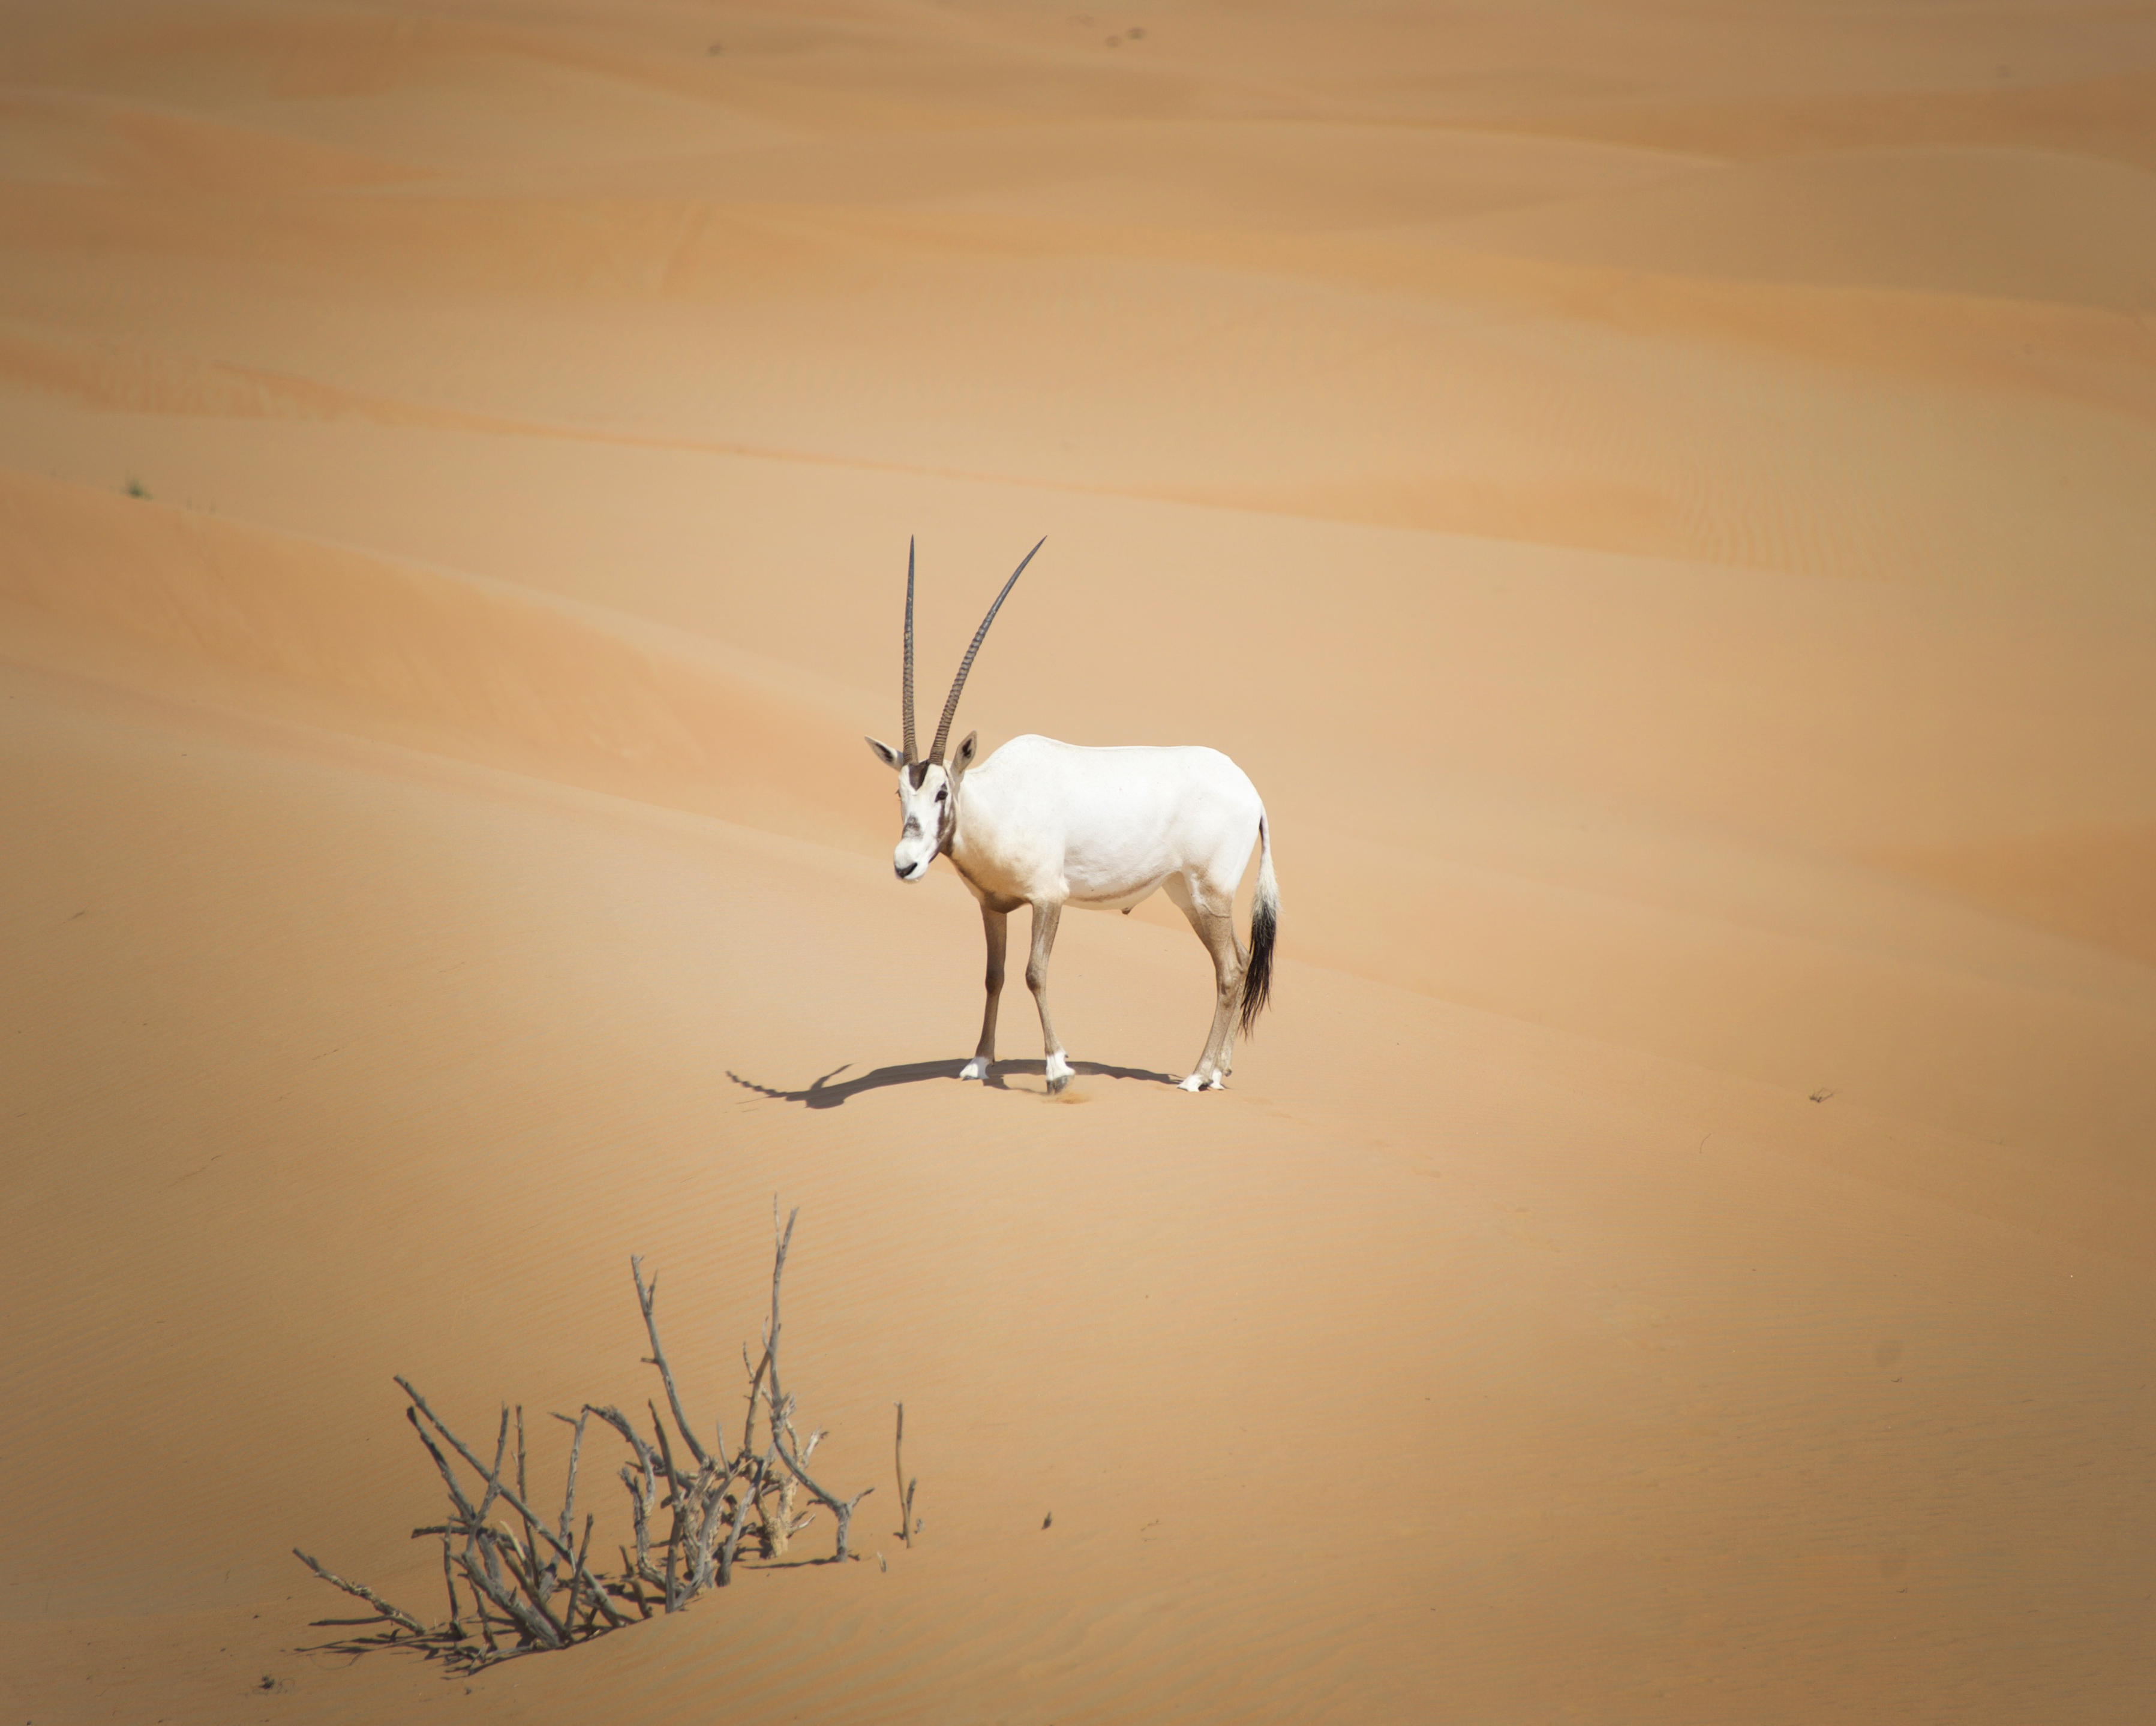 Desert Safaris that Make a Positive Difference in Dubai